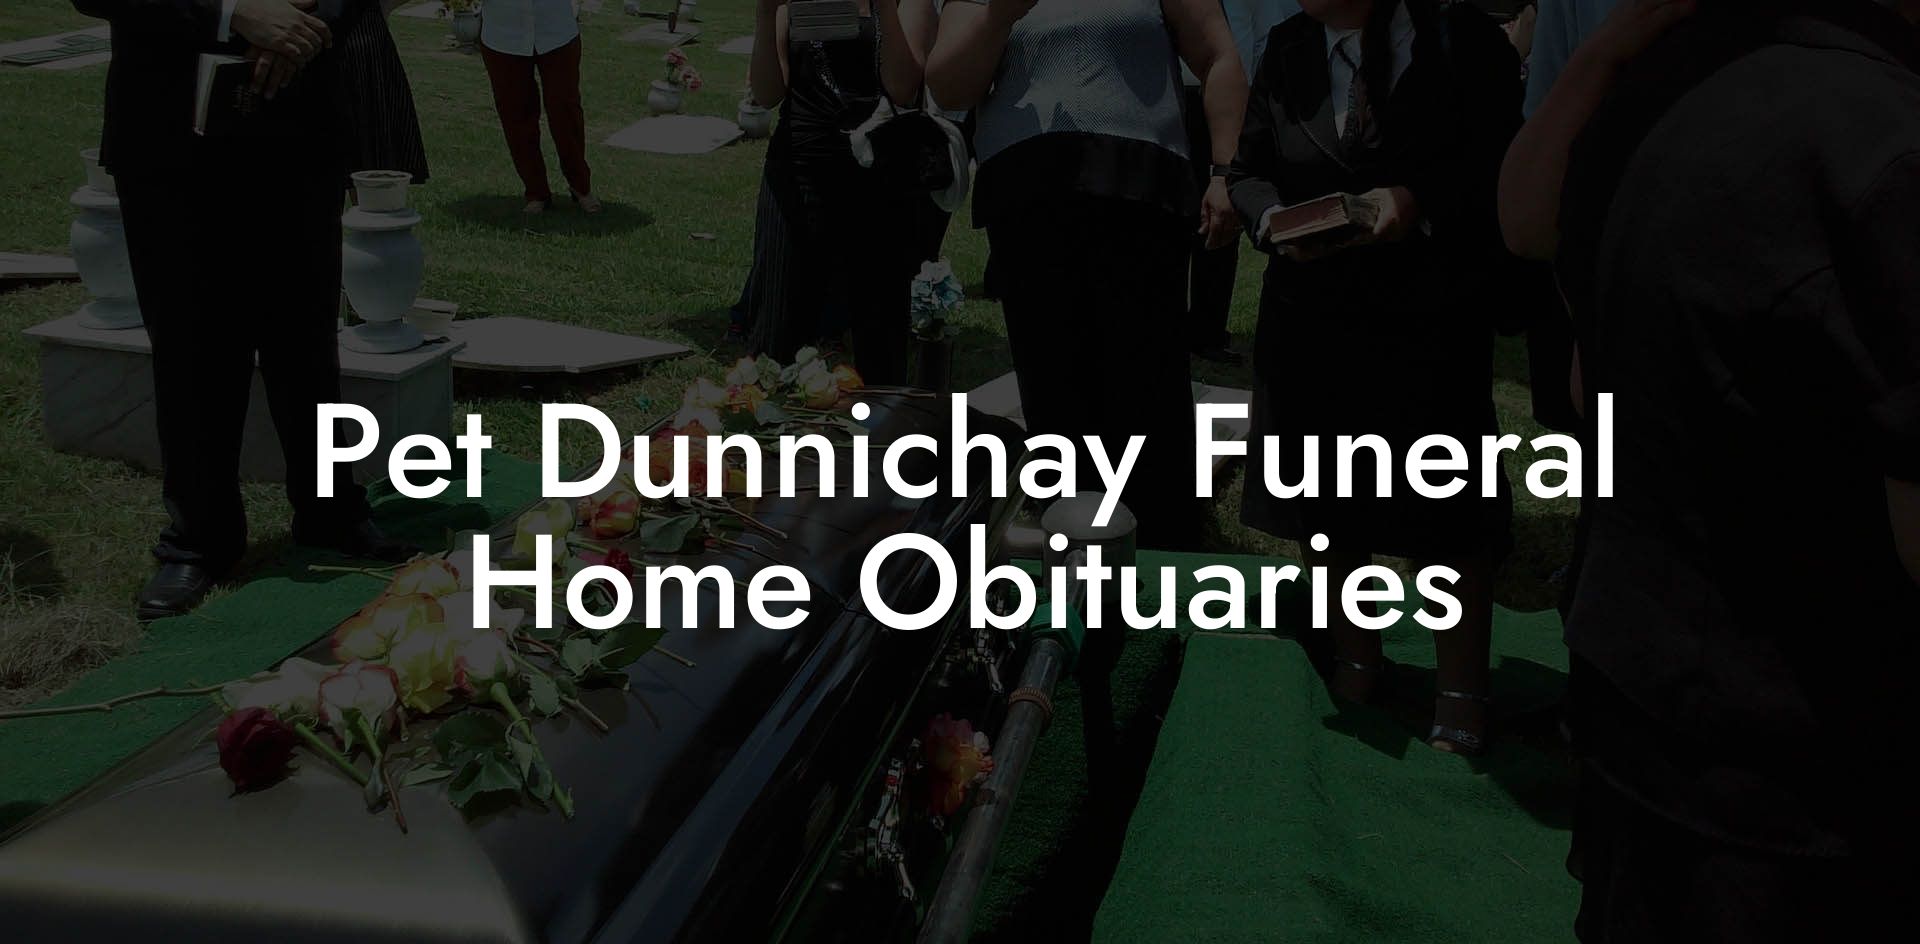 Pet Dunnichay Funeral Home Obituaries